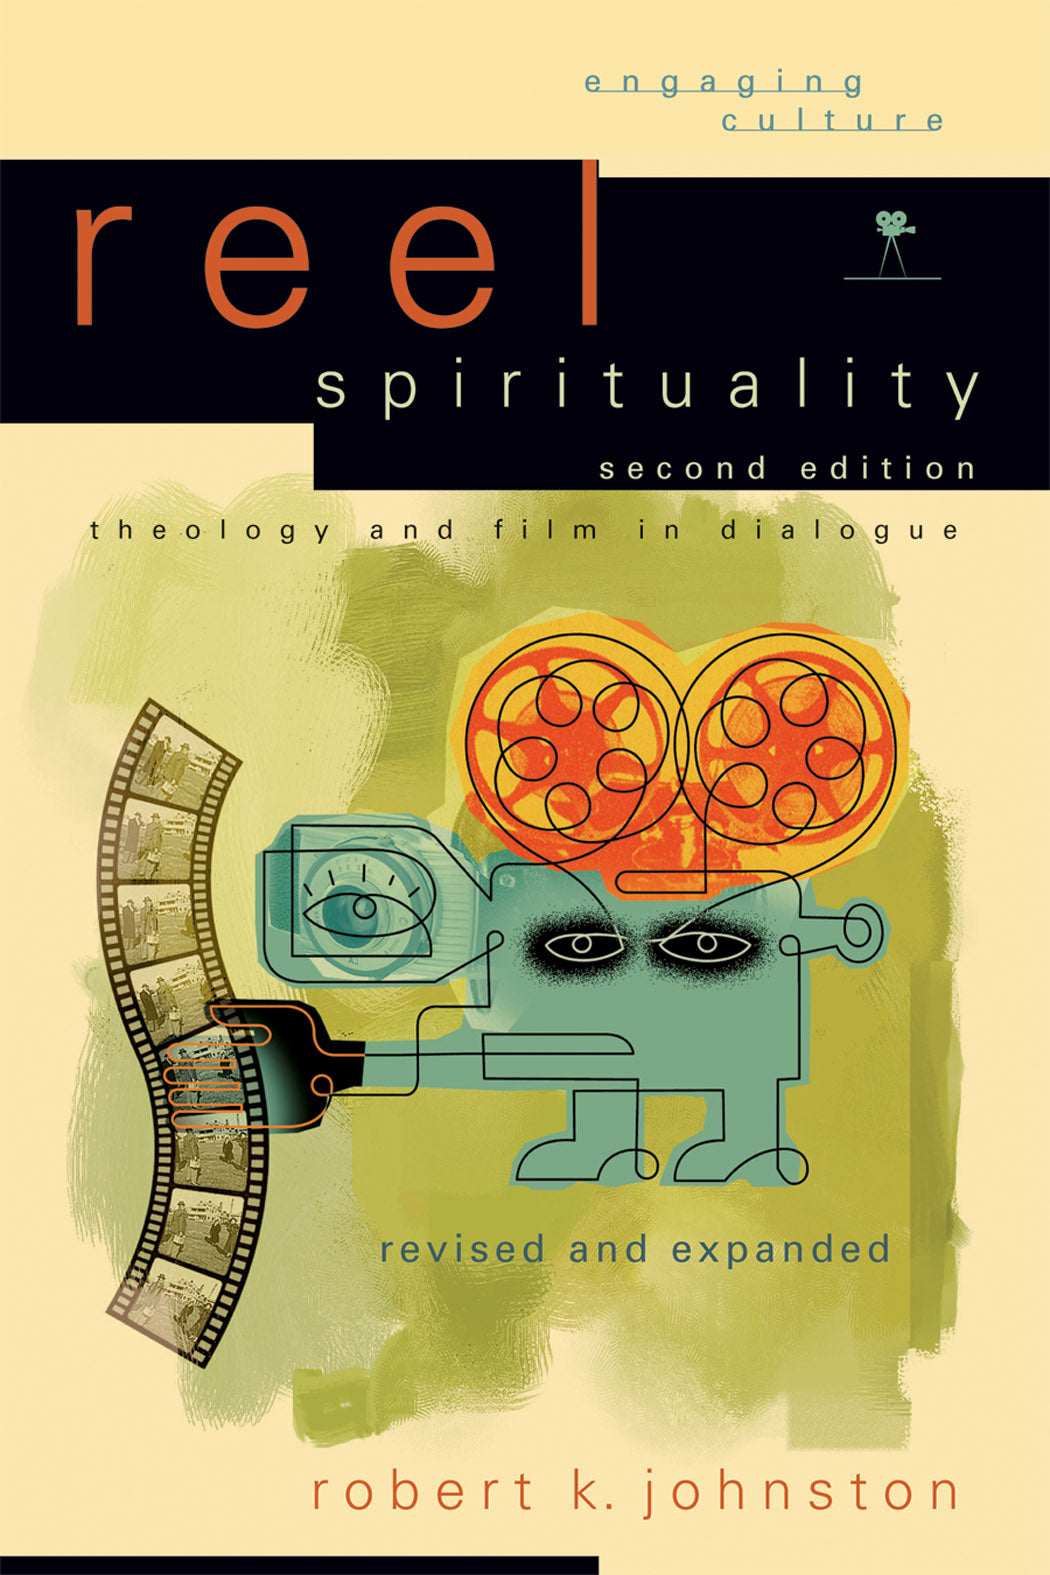 Image of Reel Spirituality other